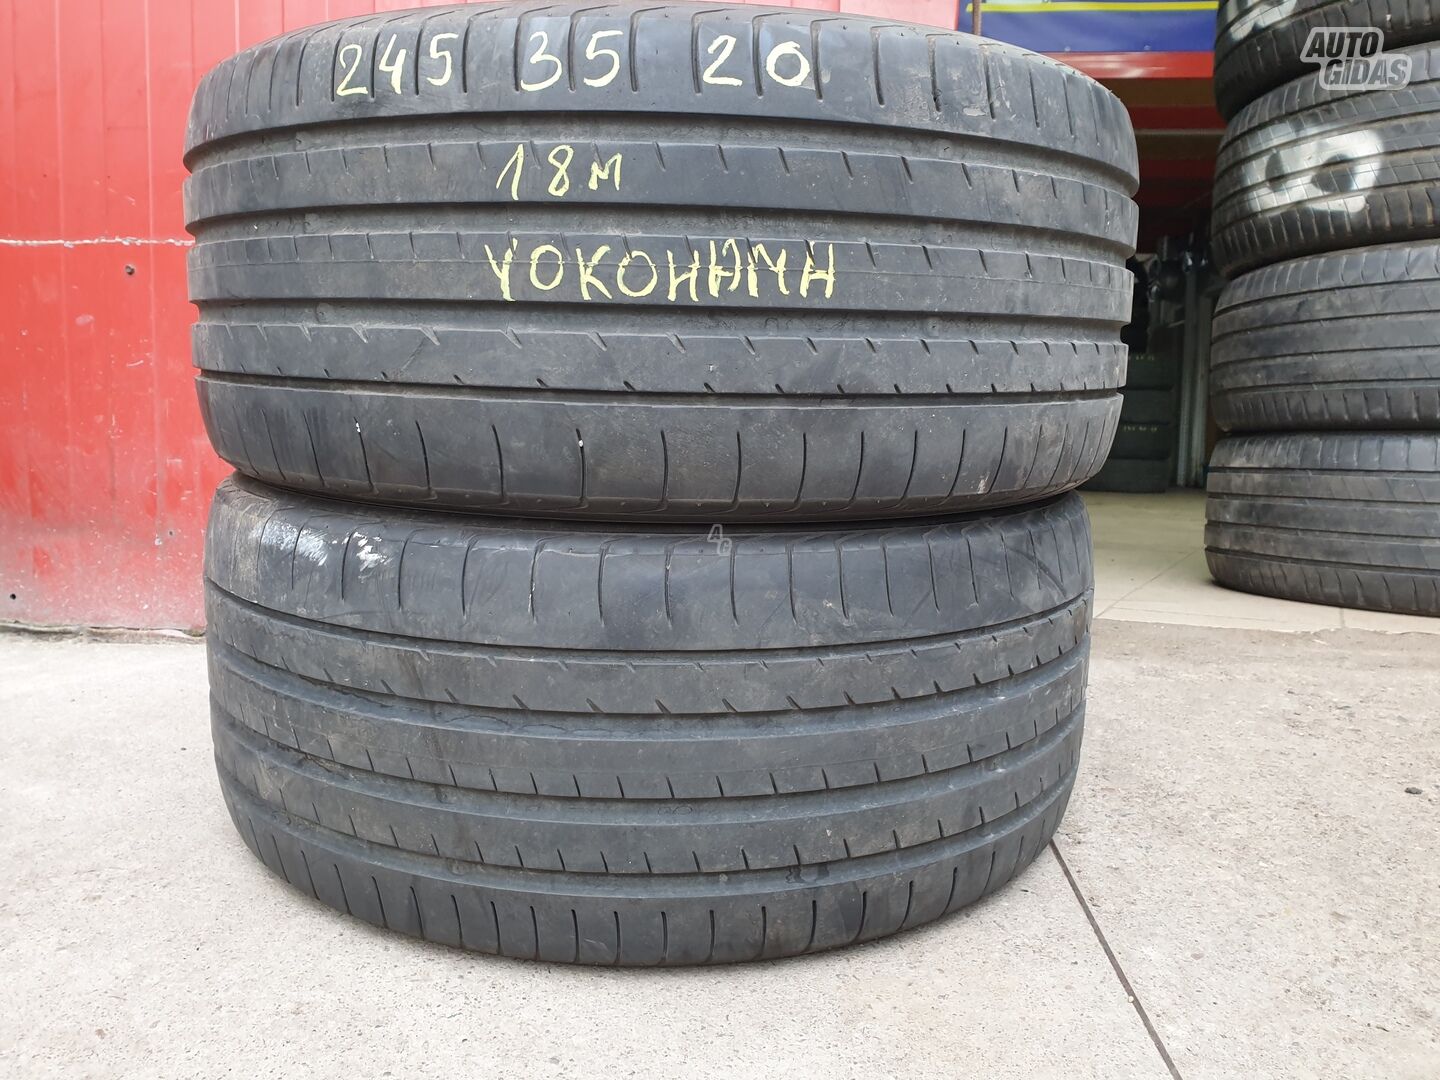 Yokohama R20 summer tyres passanger car